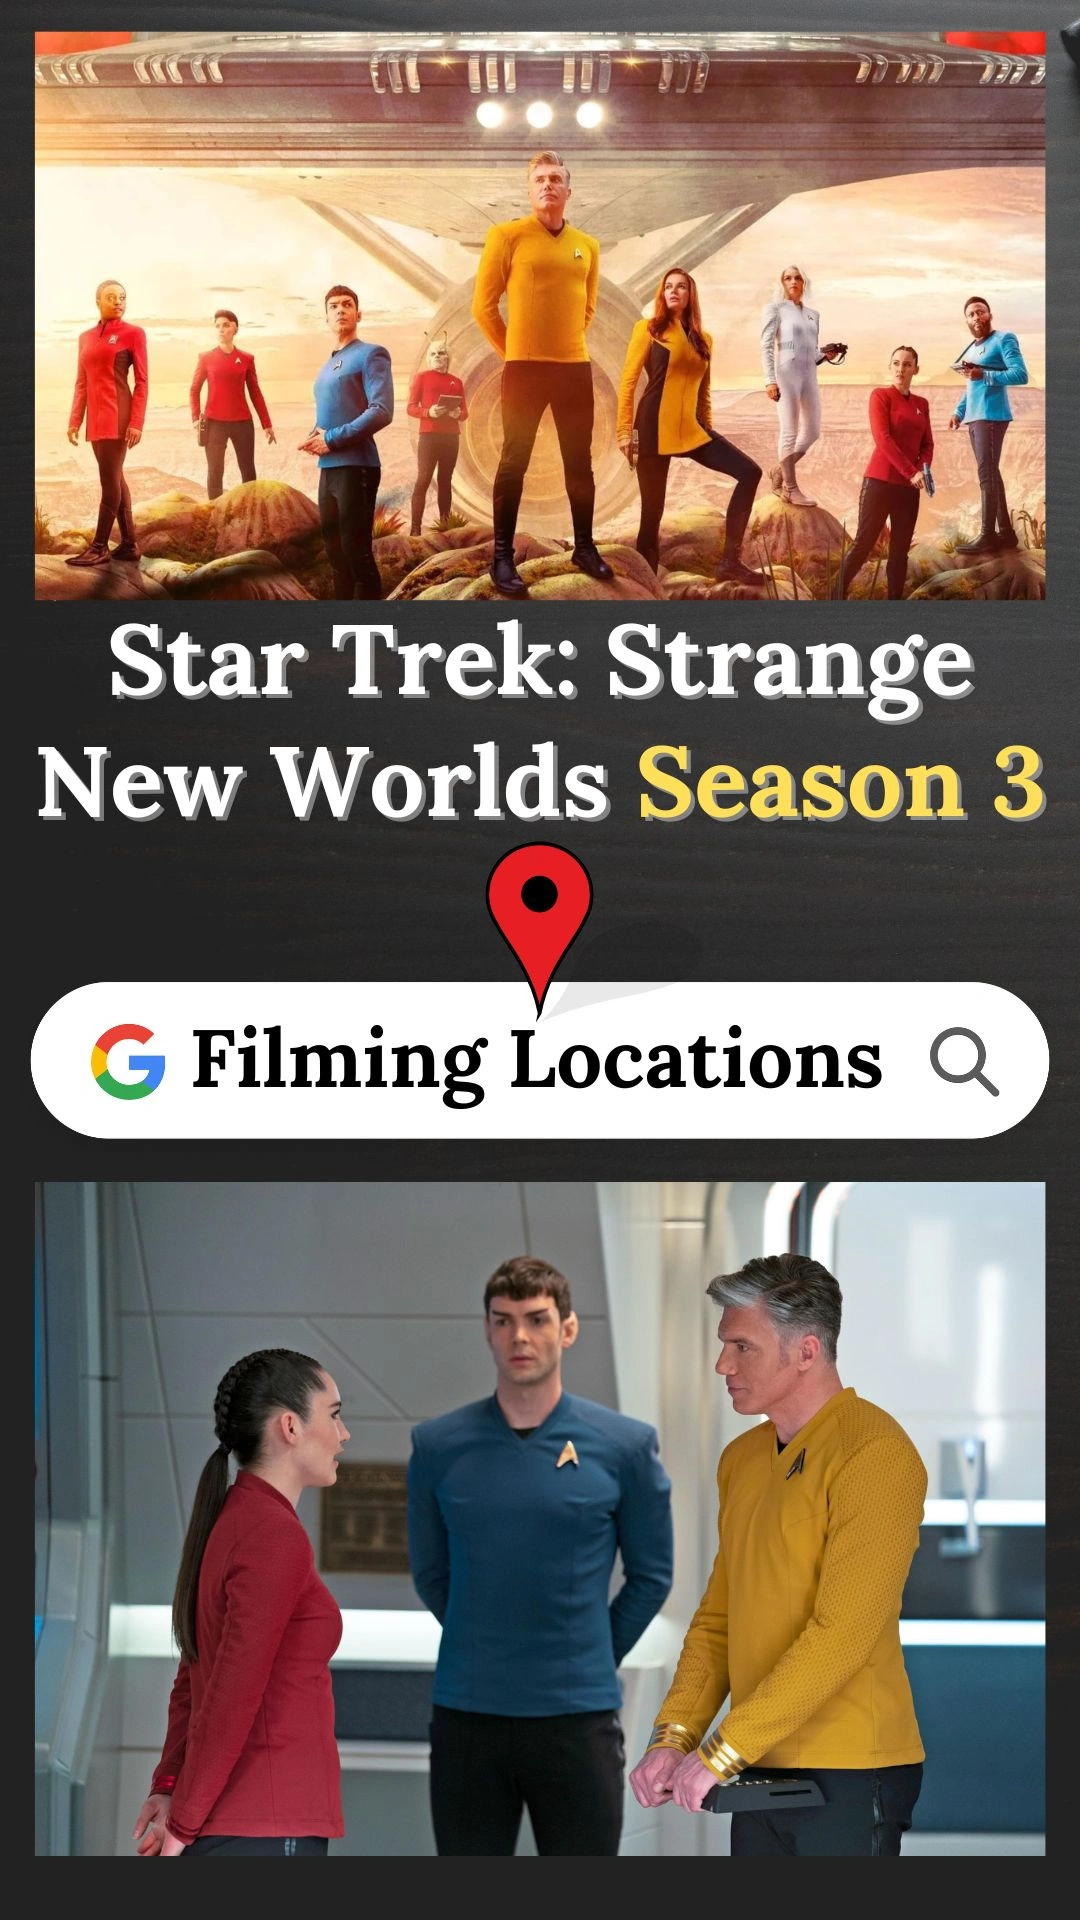 Star Trek: Strange New Worlds Season 3 Filming Locations